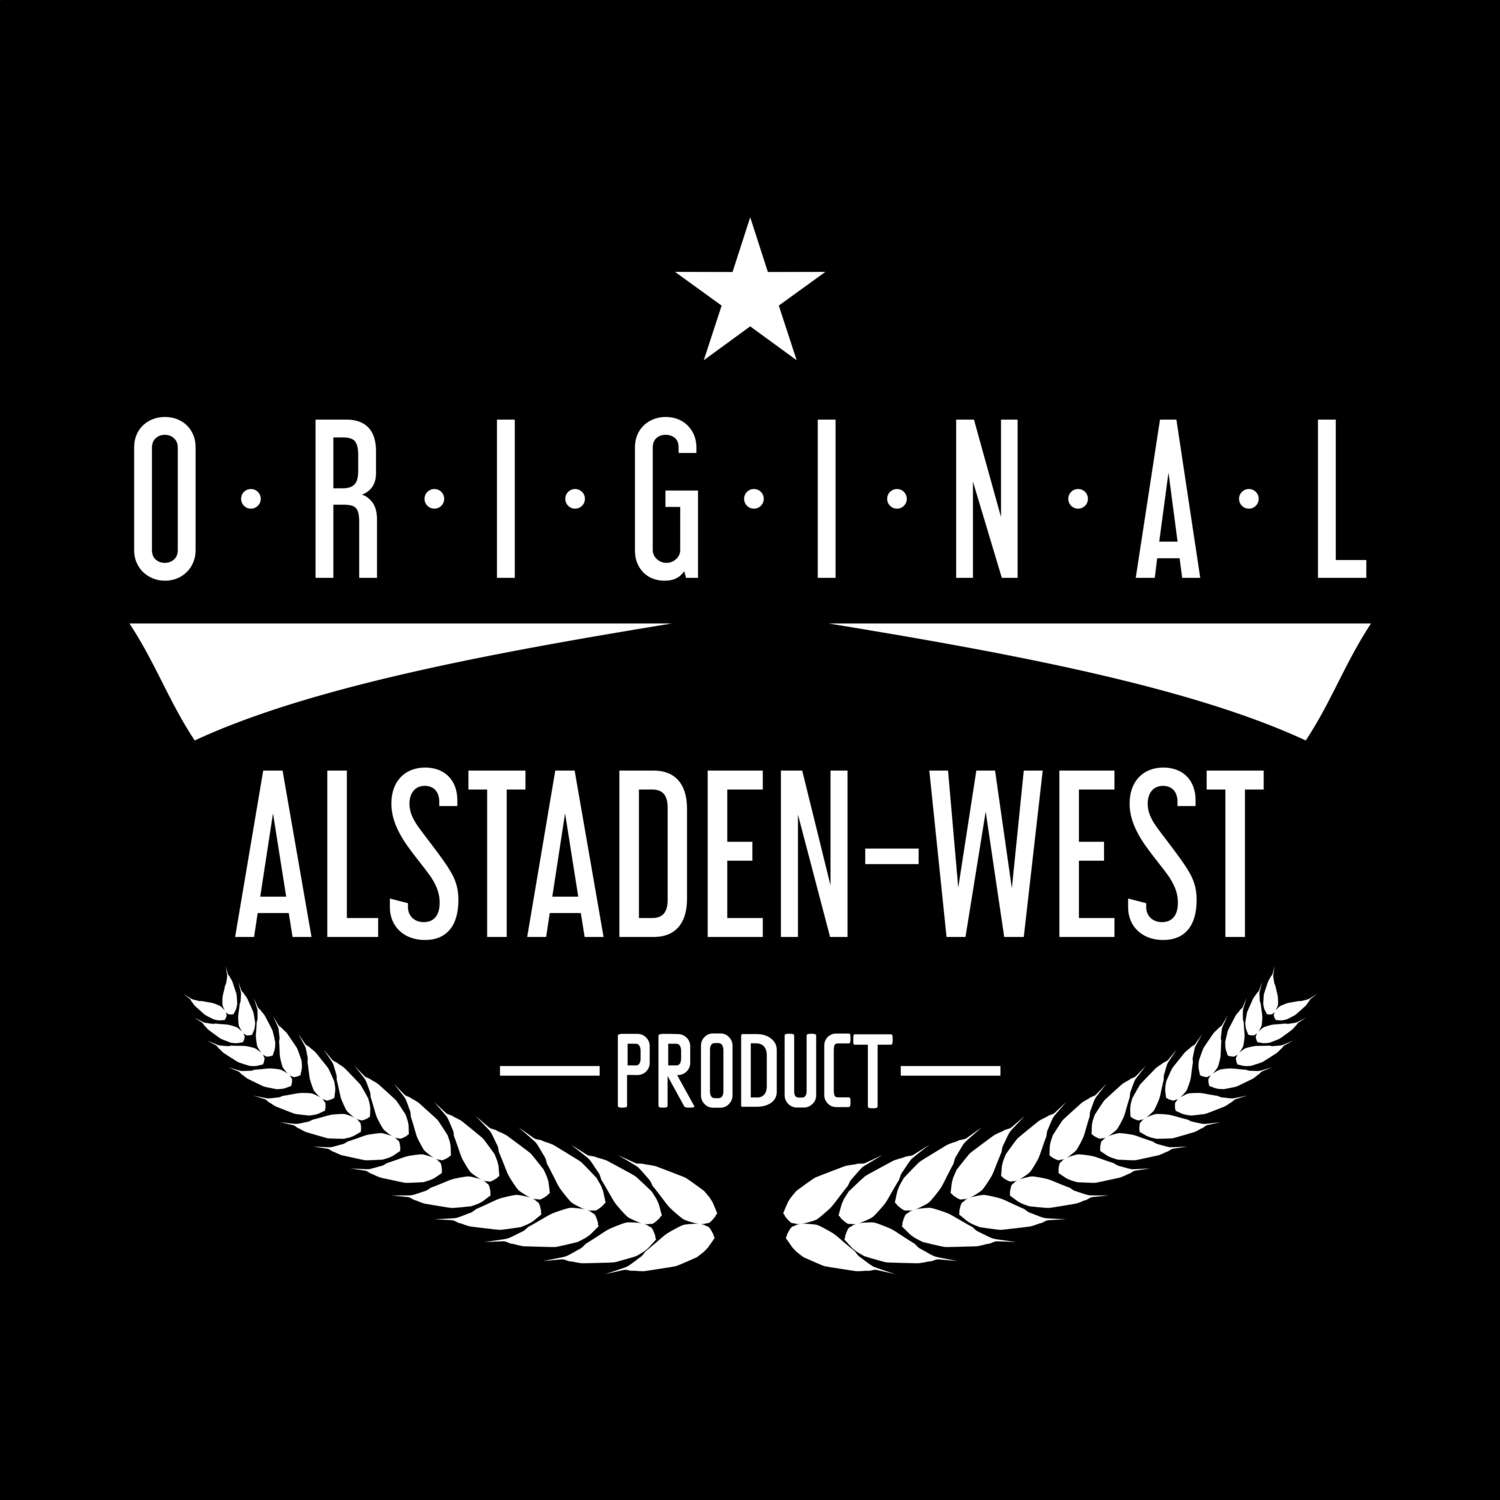 Alstaden-West T-Shirt »Original Product«